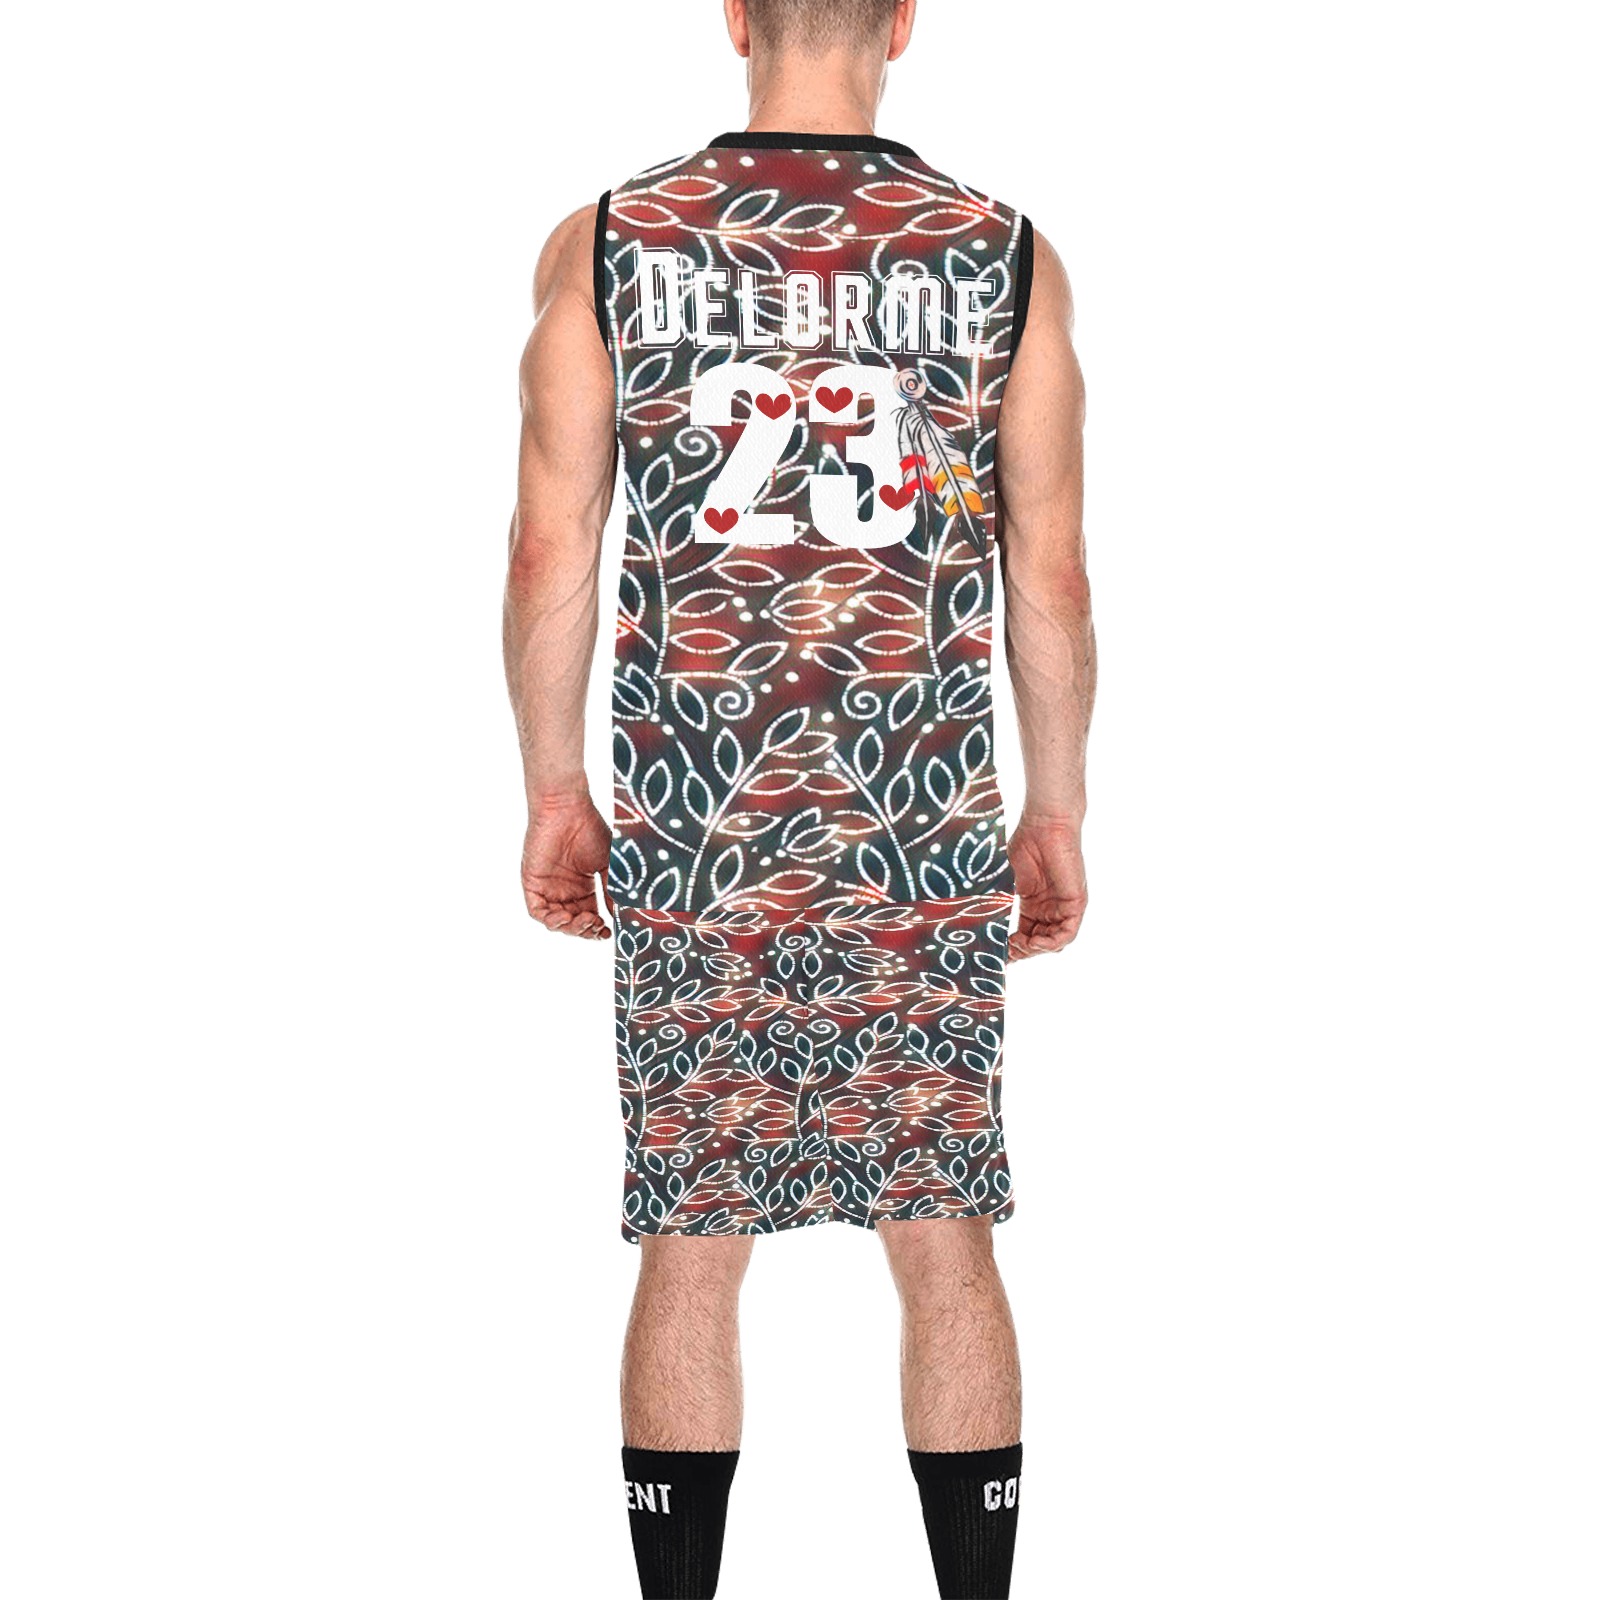 MMIW Delorme All Over Print Basketball Uniform